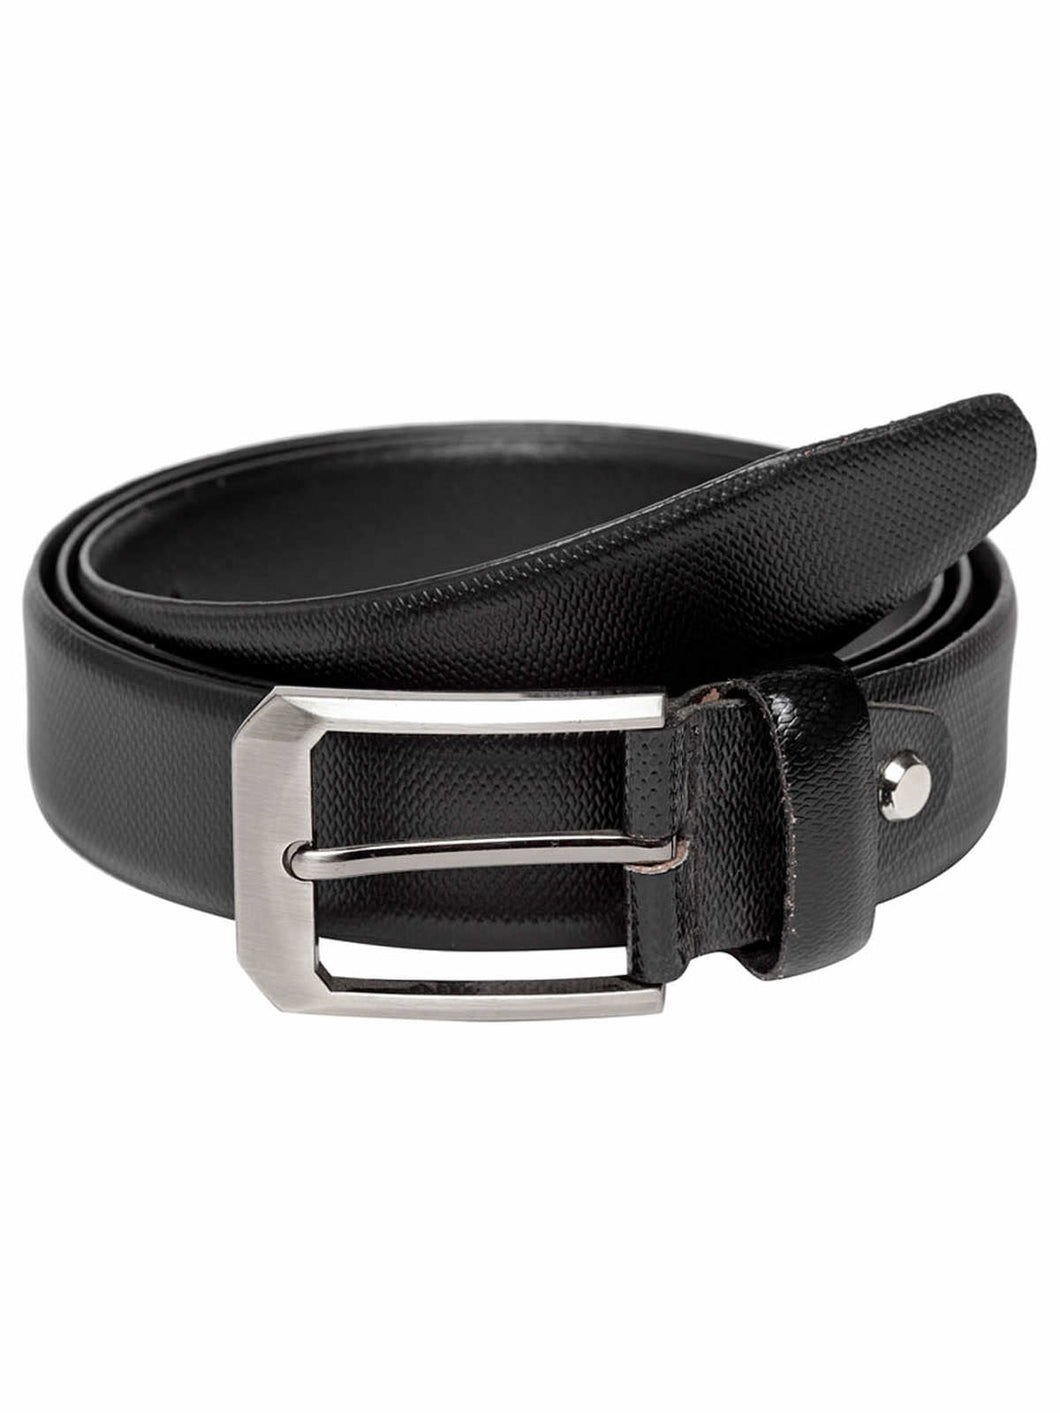 Teakwood Leather Black Belts